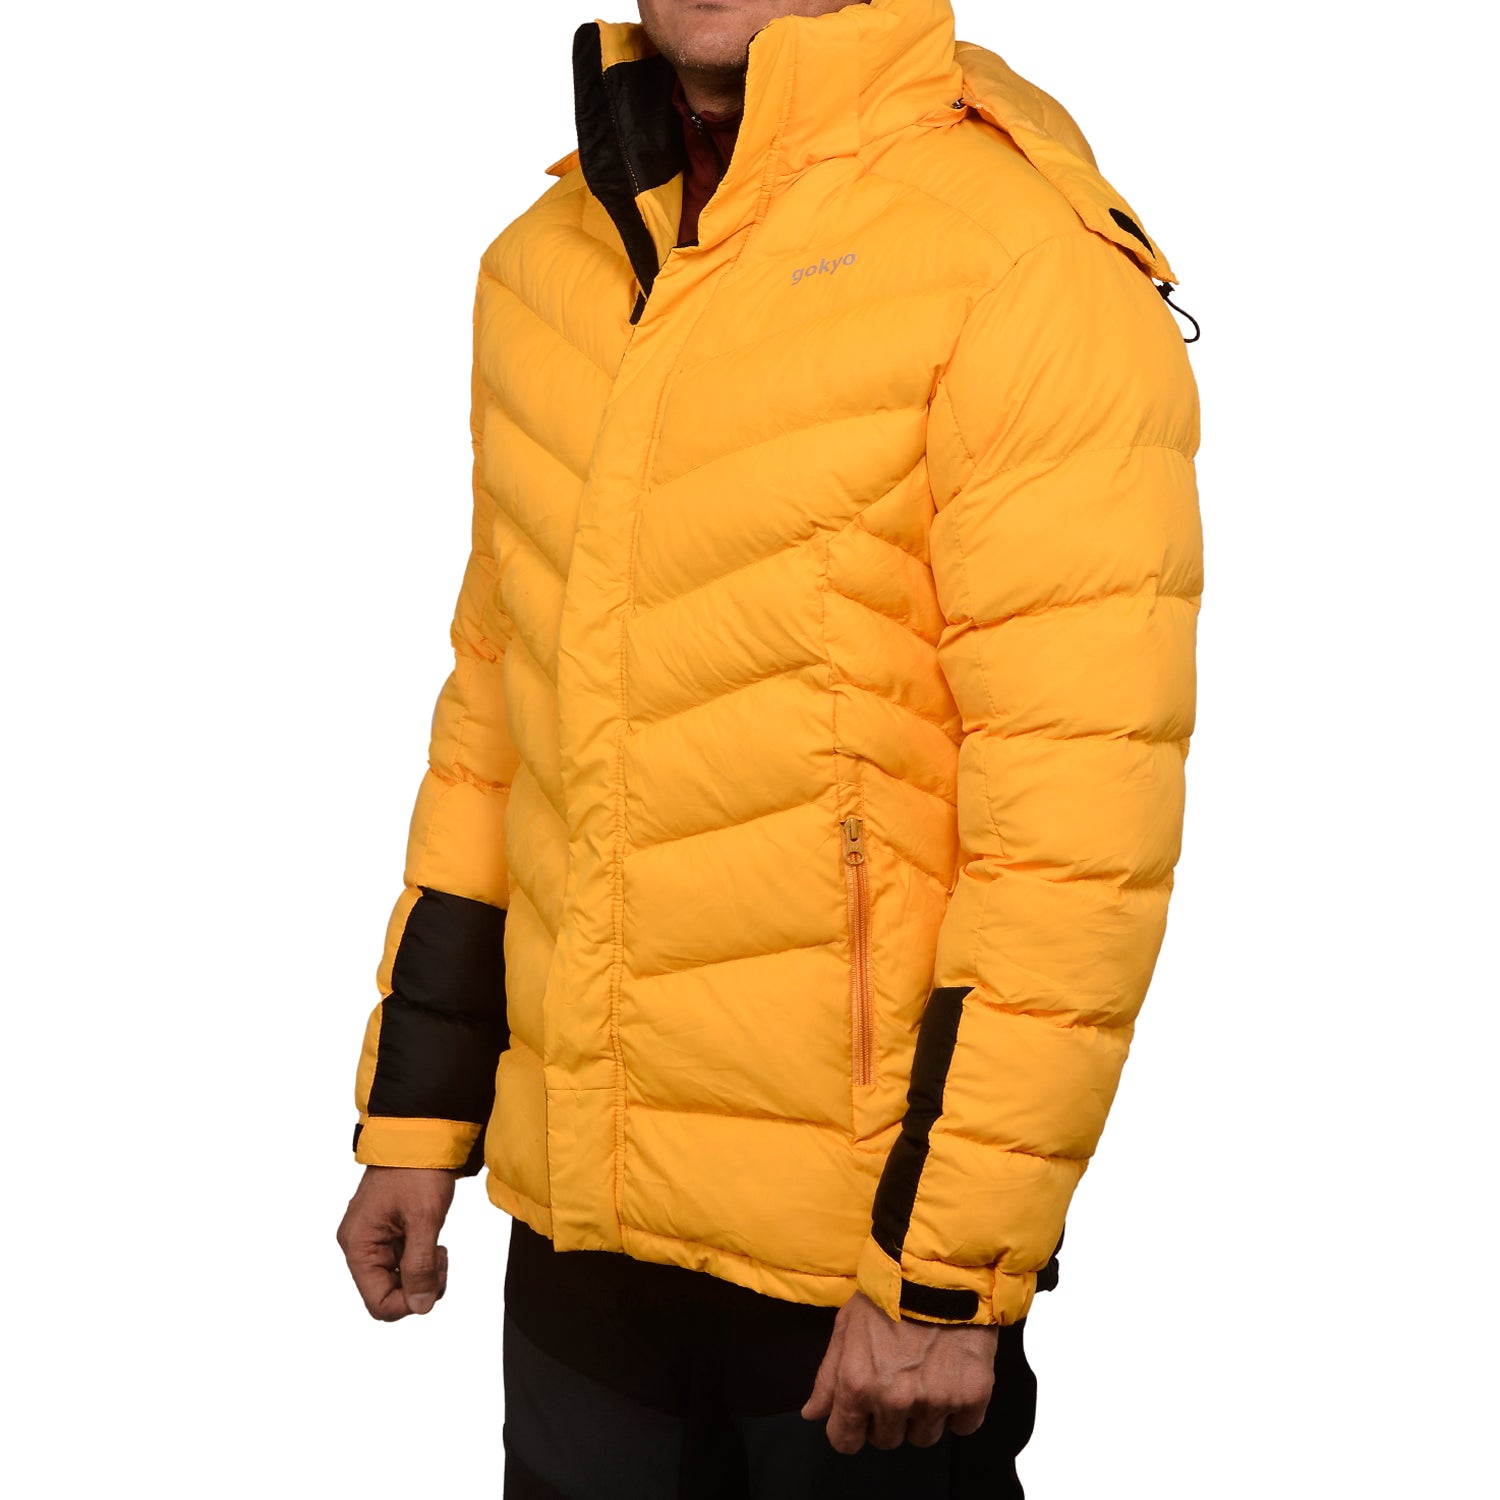 Buy Gokyo K2 Survivor Down Jacket | Jackets at Gokyo Outdoor Clothing & Gear